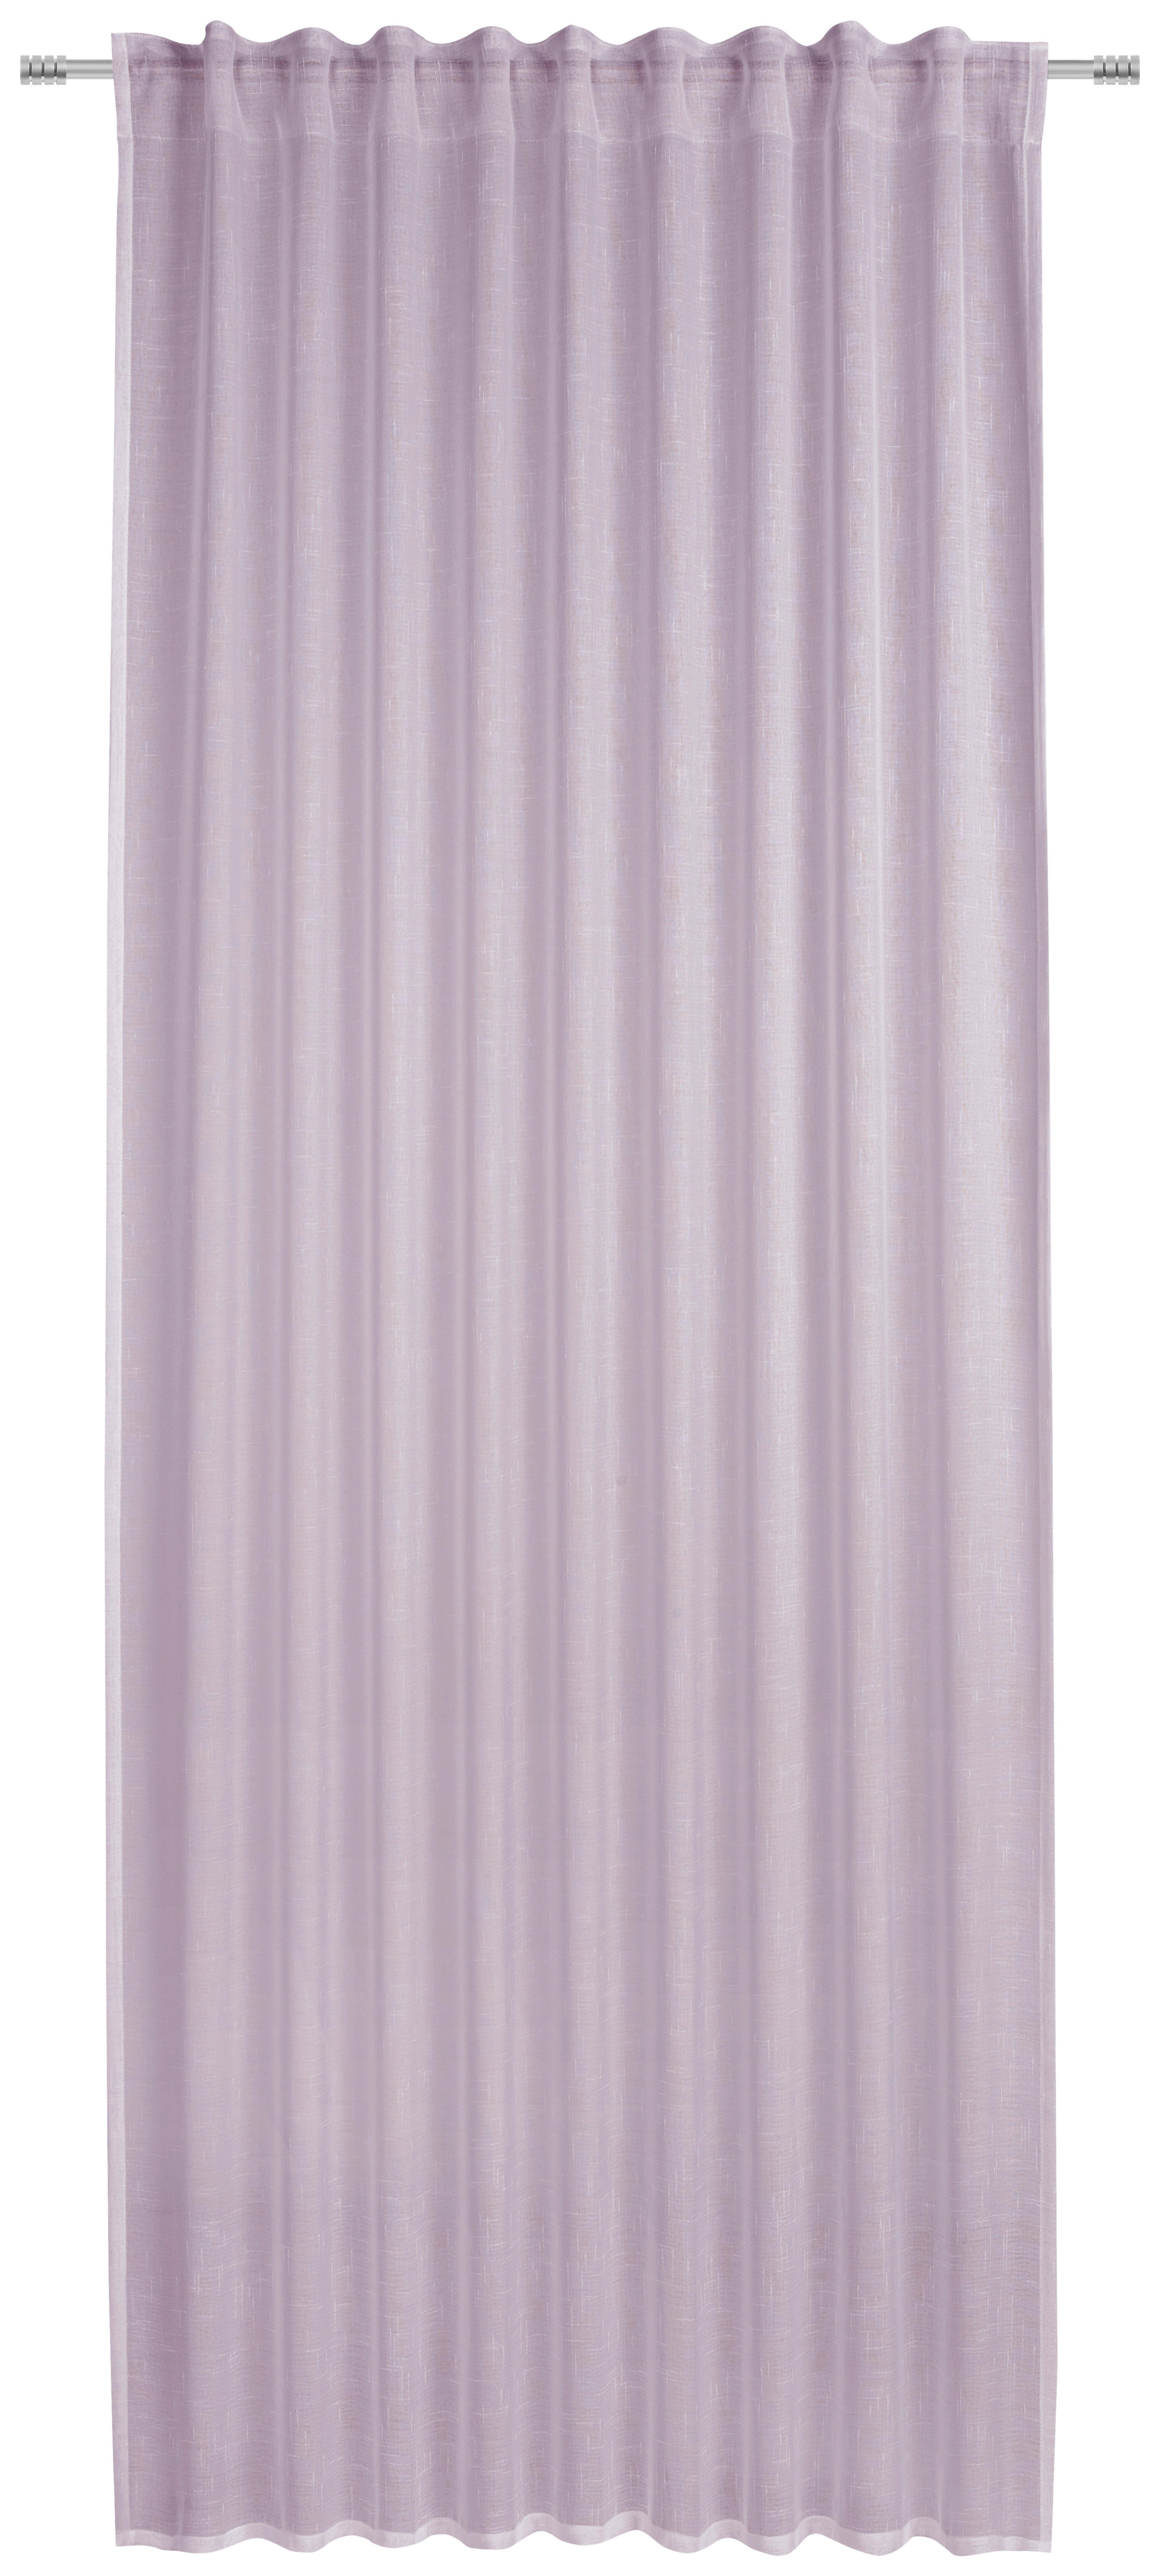 HOTELLGARDIN halvtransparent  - lila, Basics, textil (135/245cm) - Esposa